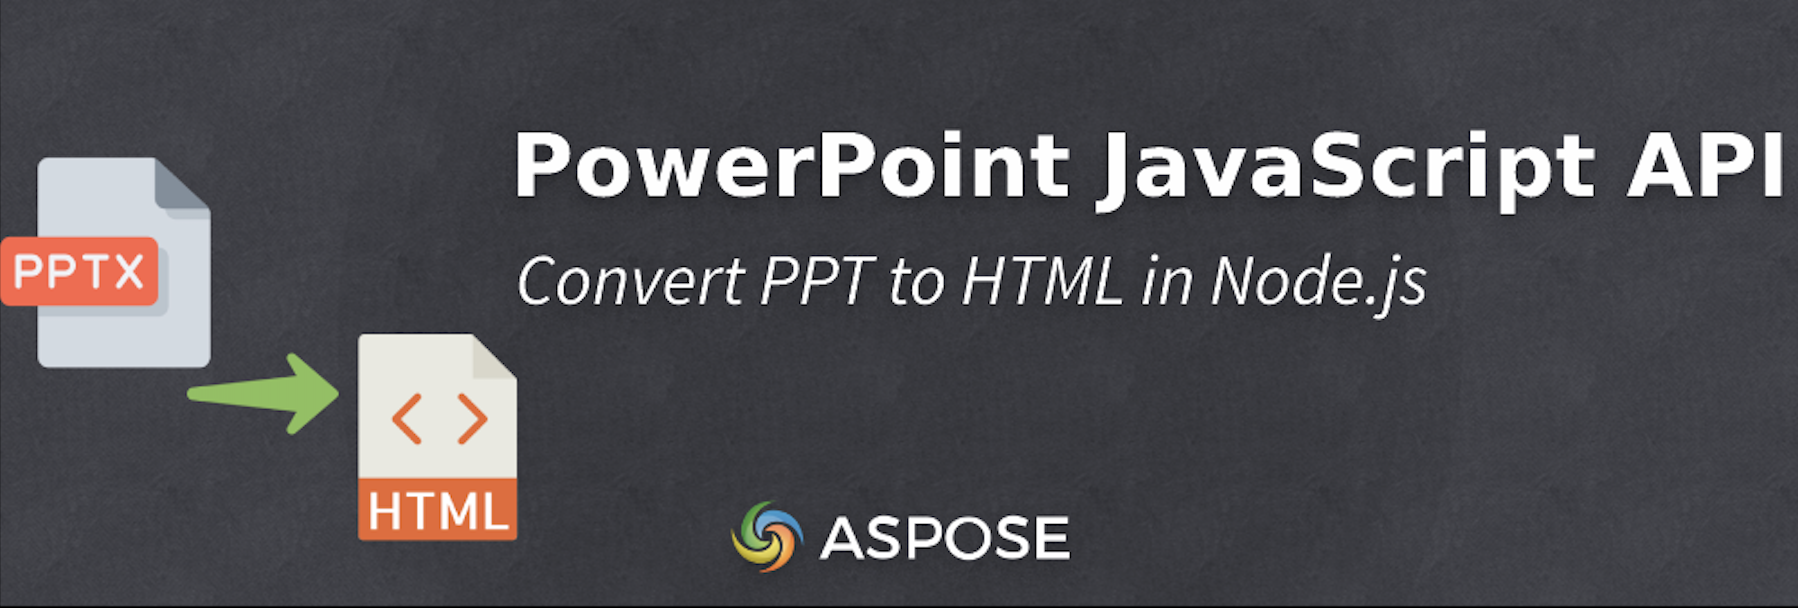 Convertir PPT a HTML en Node.js - API JavaScript de PowerPoint